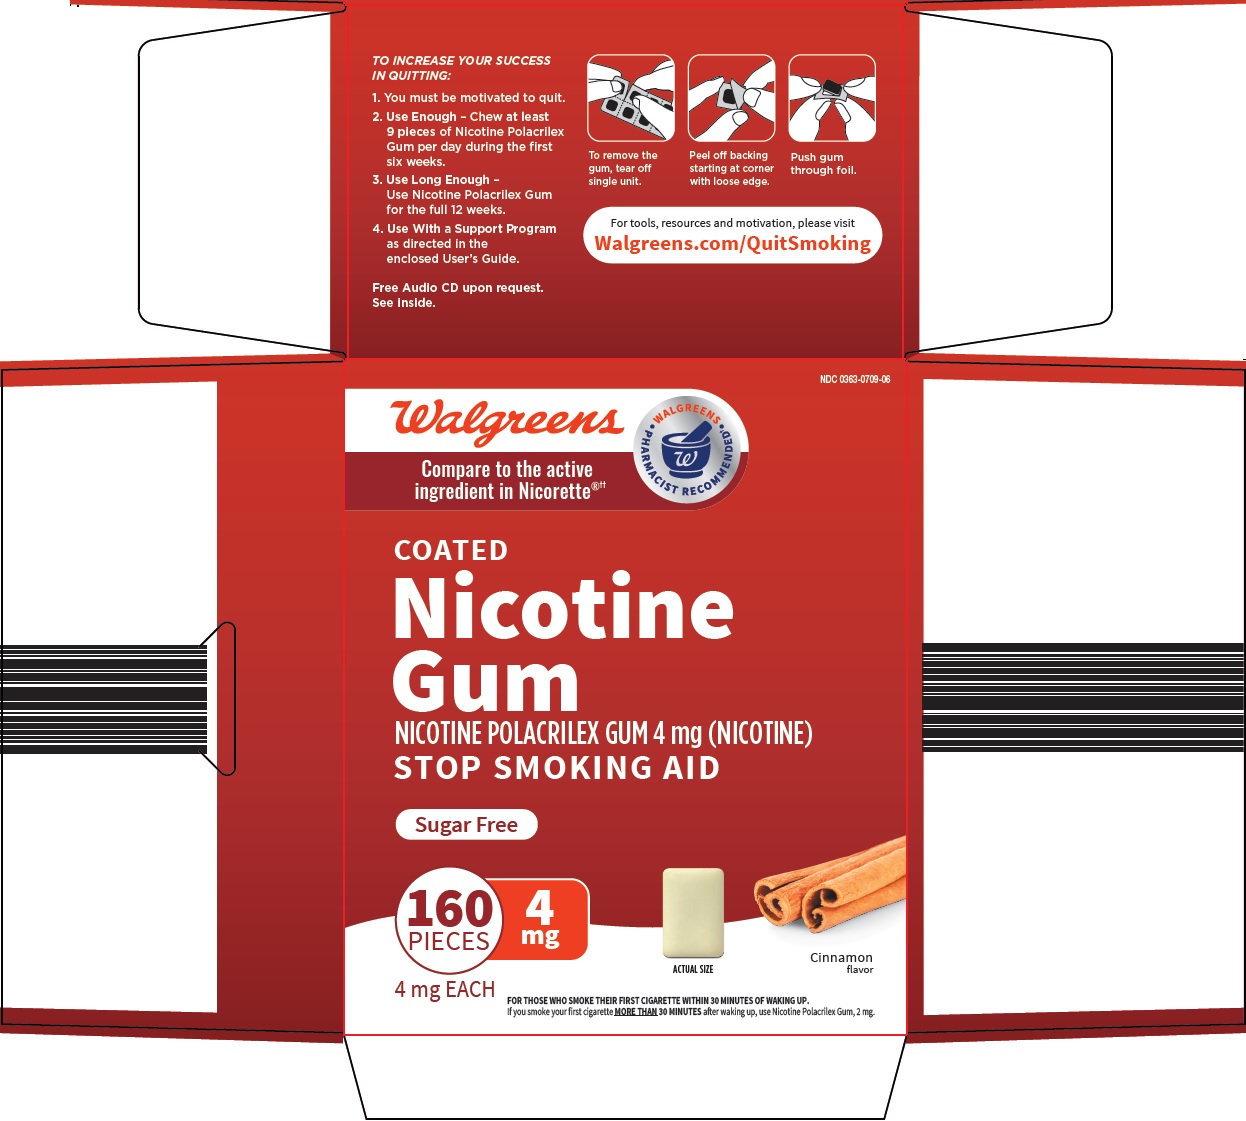 442-94-nicotine-gum-1